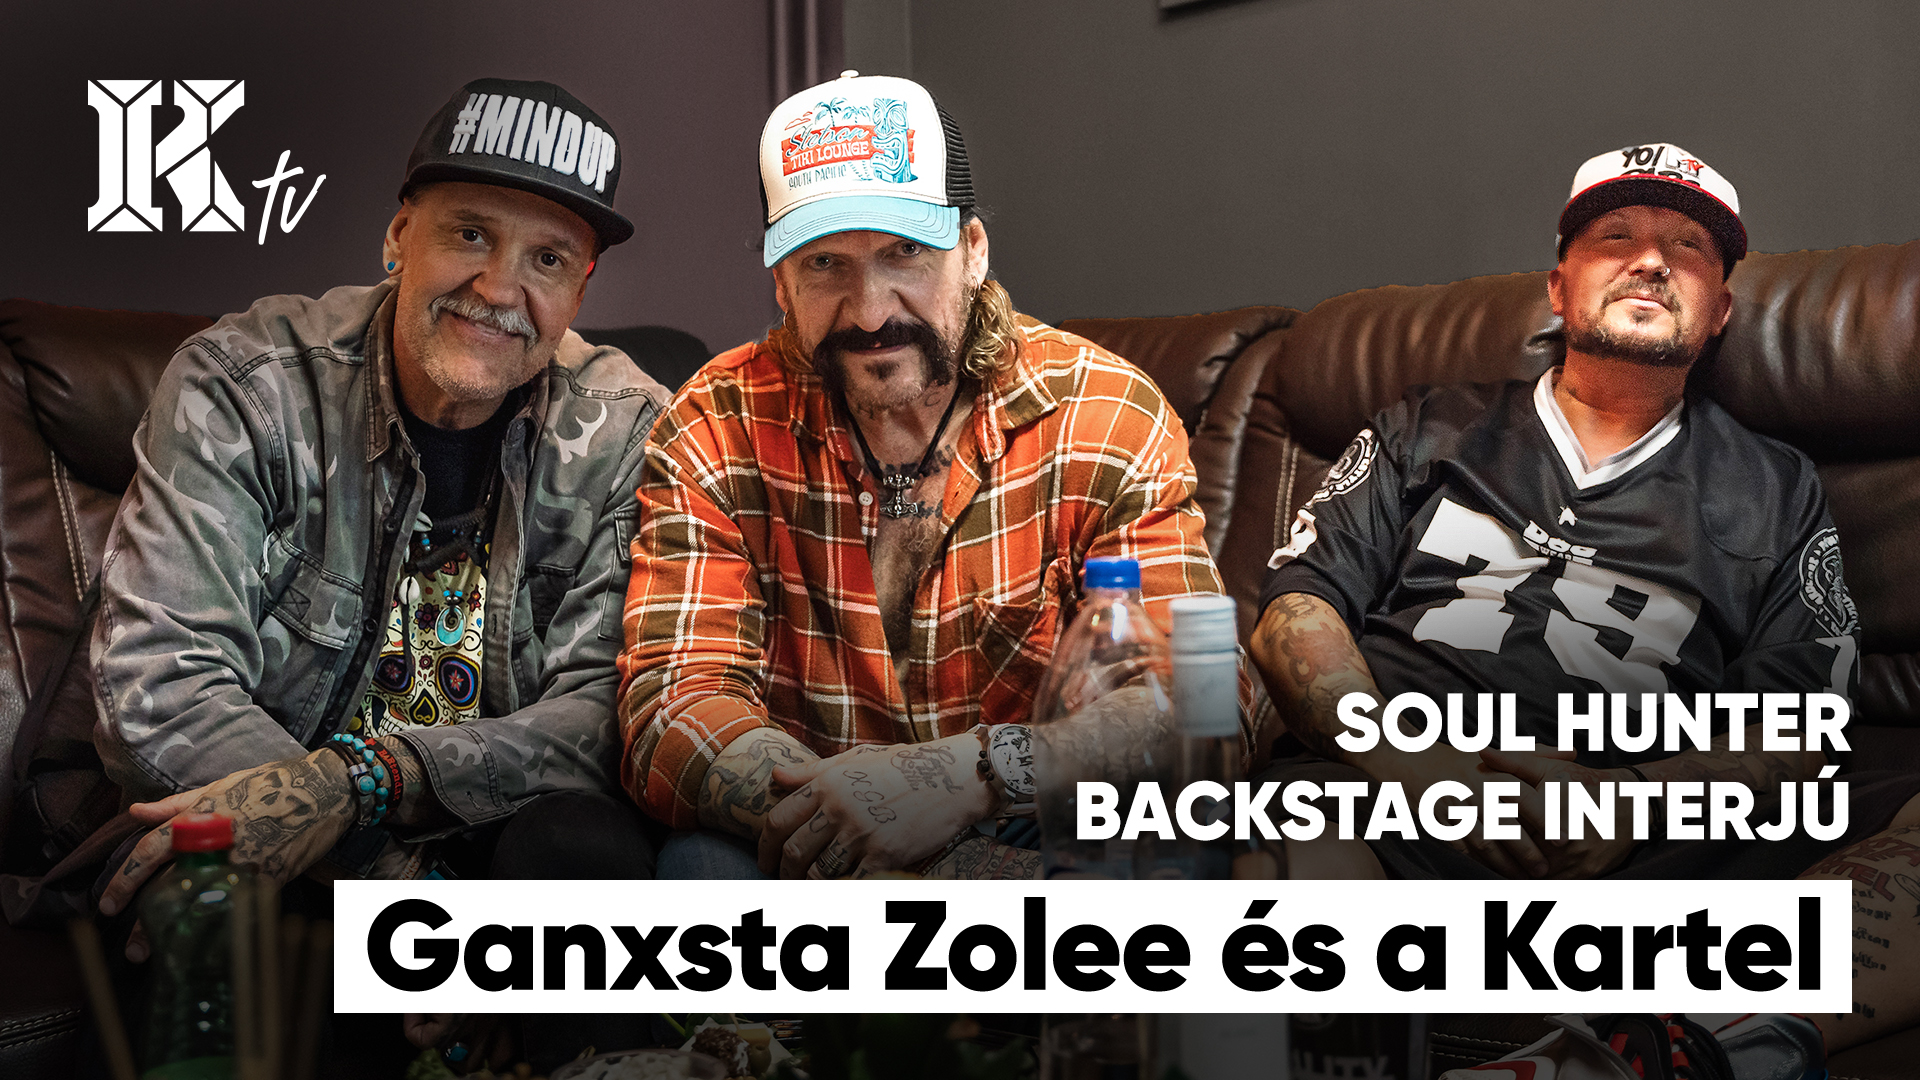 Gangsta Zolee és a Kartel,Gangsta Zolee,Zene,Koncert,Soul HUnter music Club,interjú